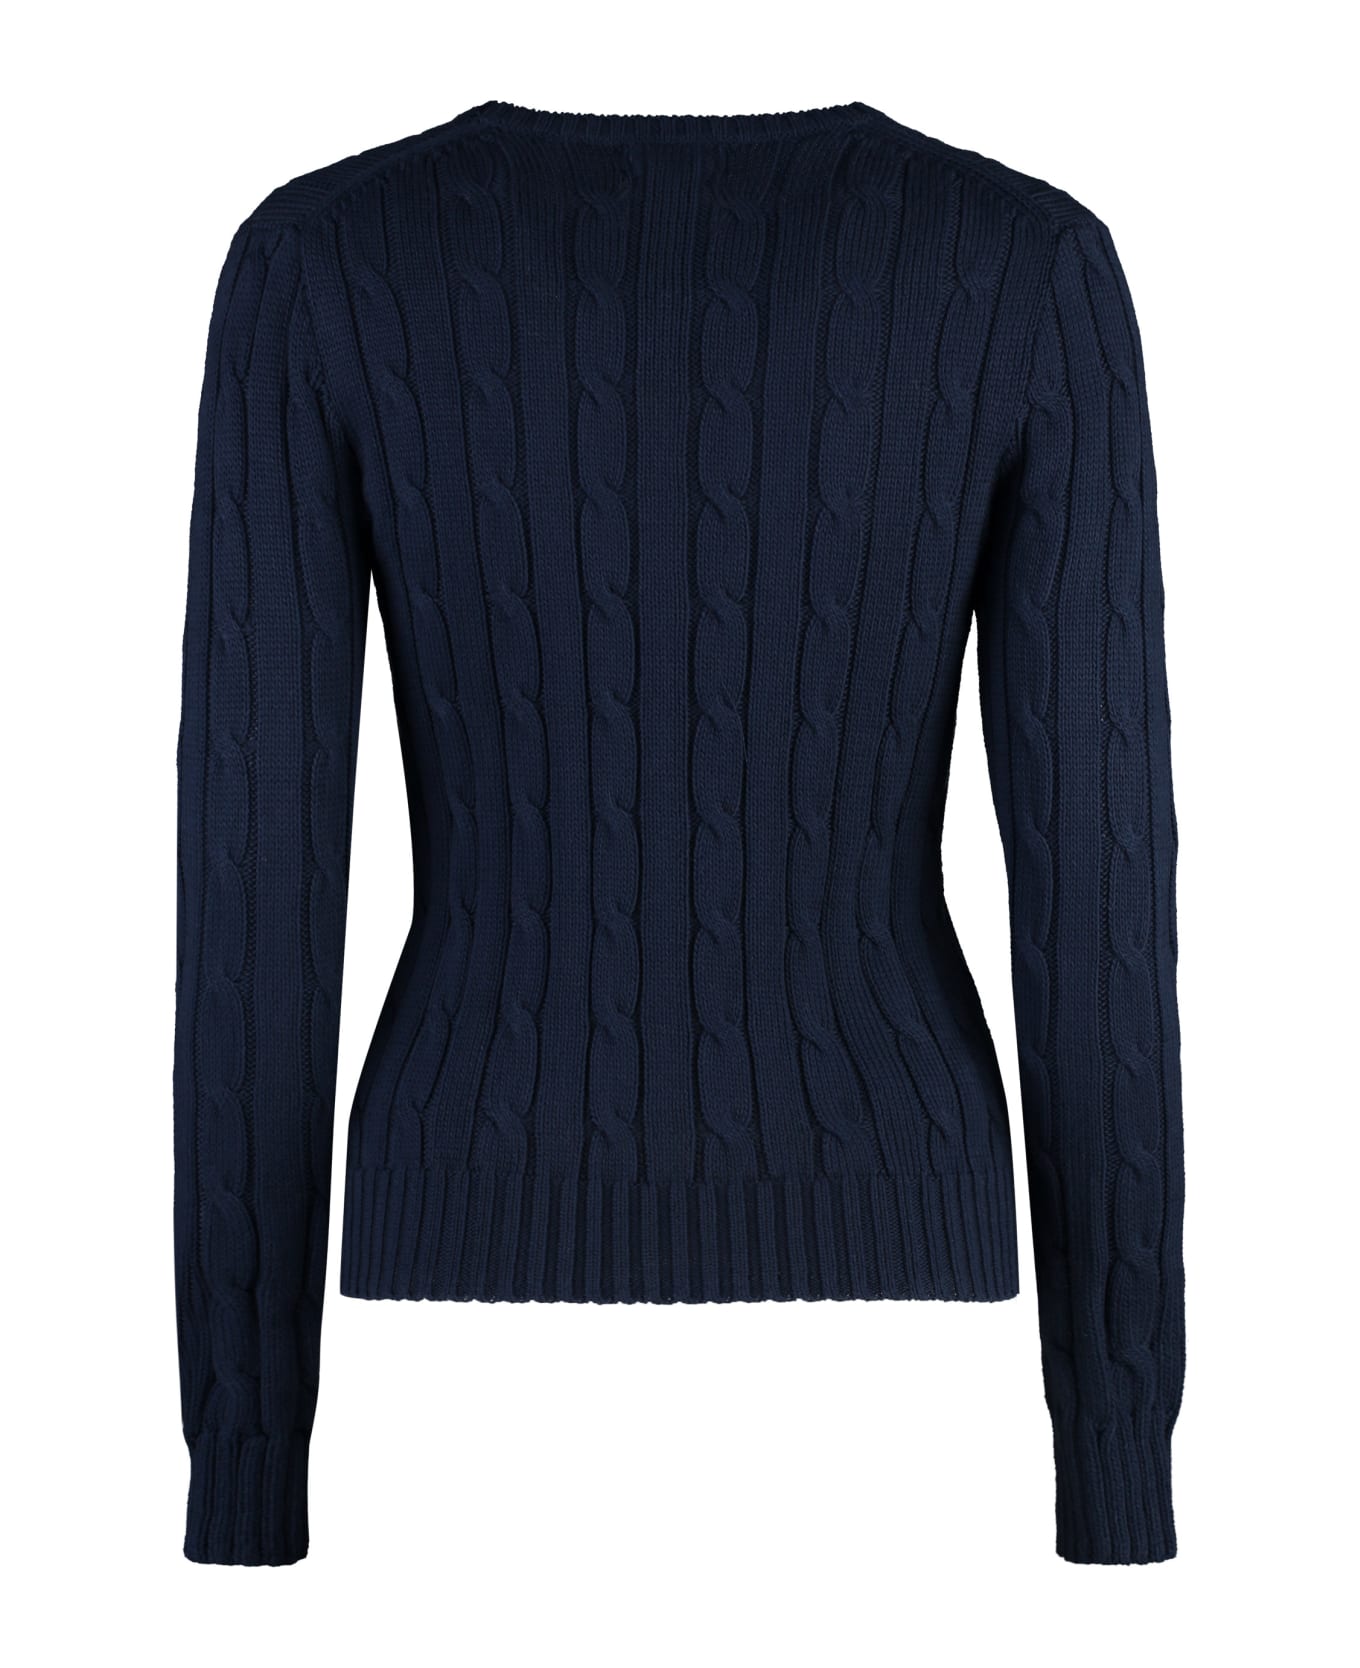 Ralph Lauren Cable Knit Sweater - blue